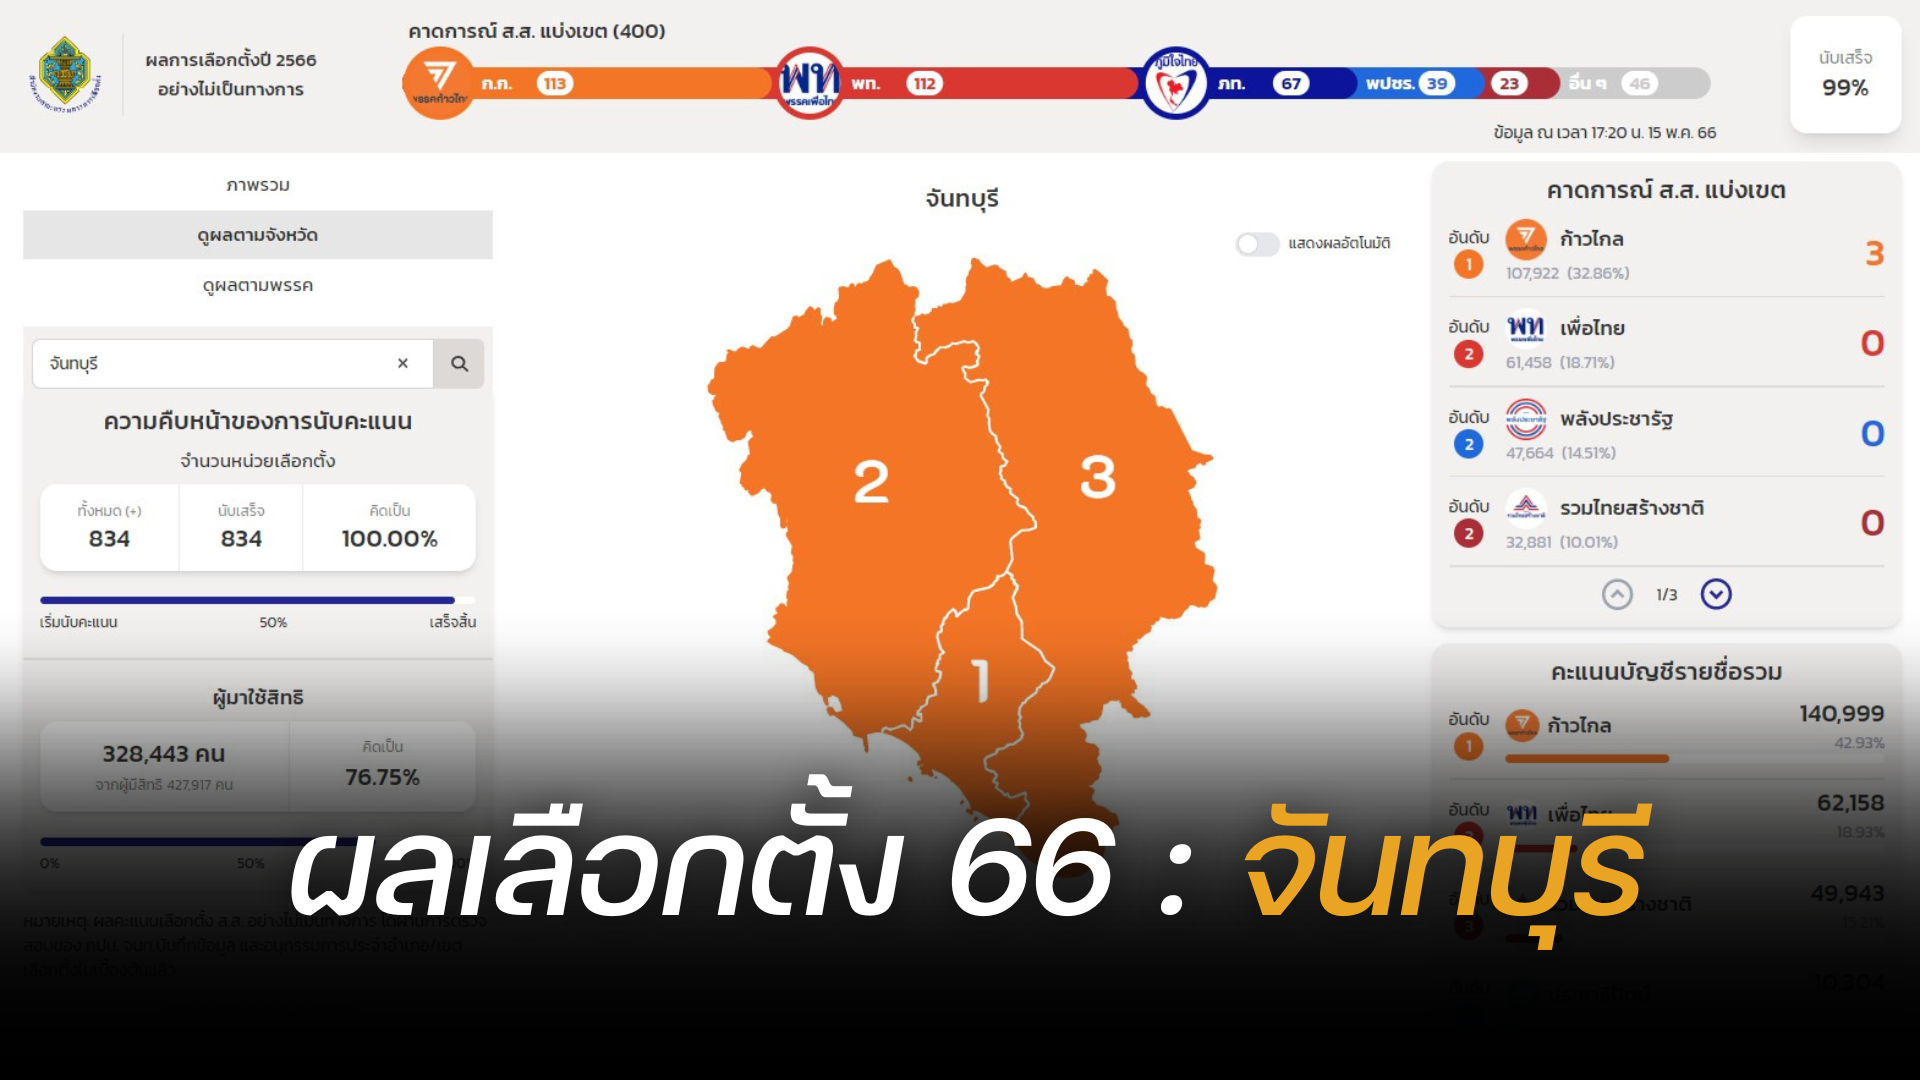 Thailand election 2566 Chanthaburi